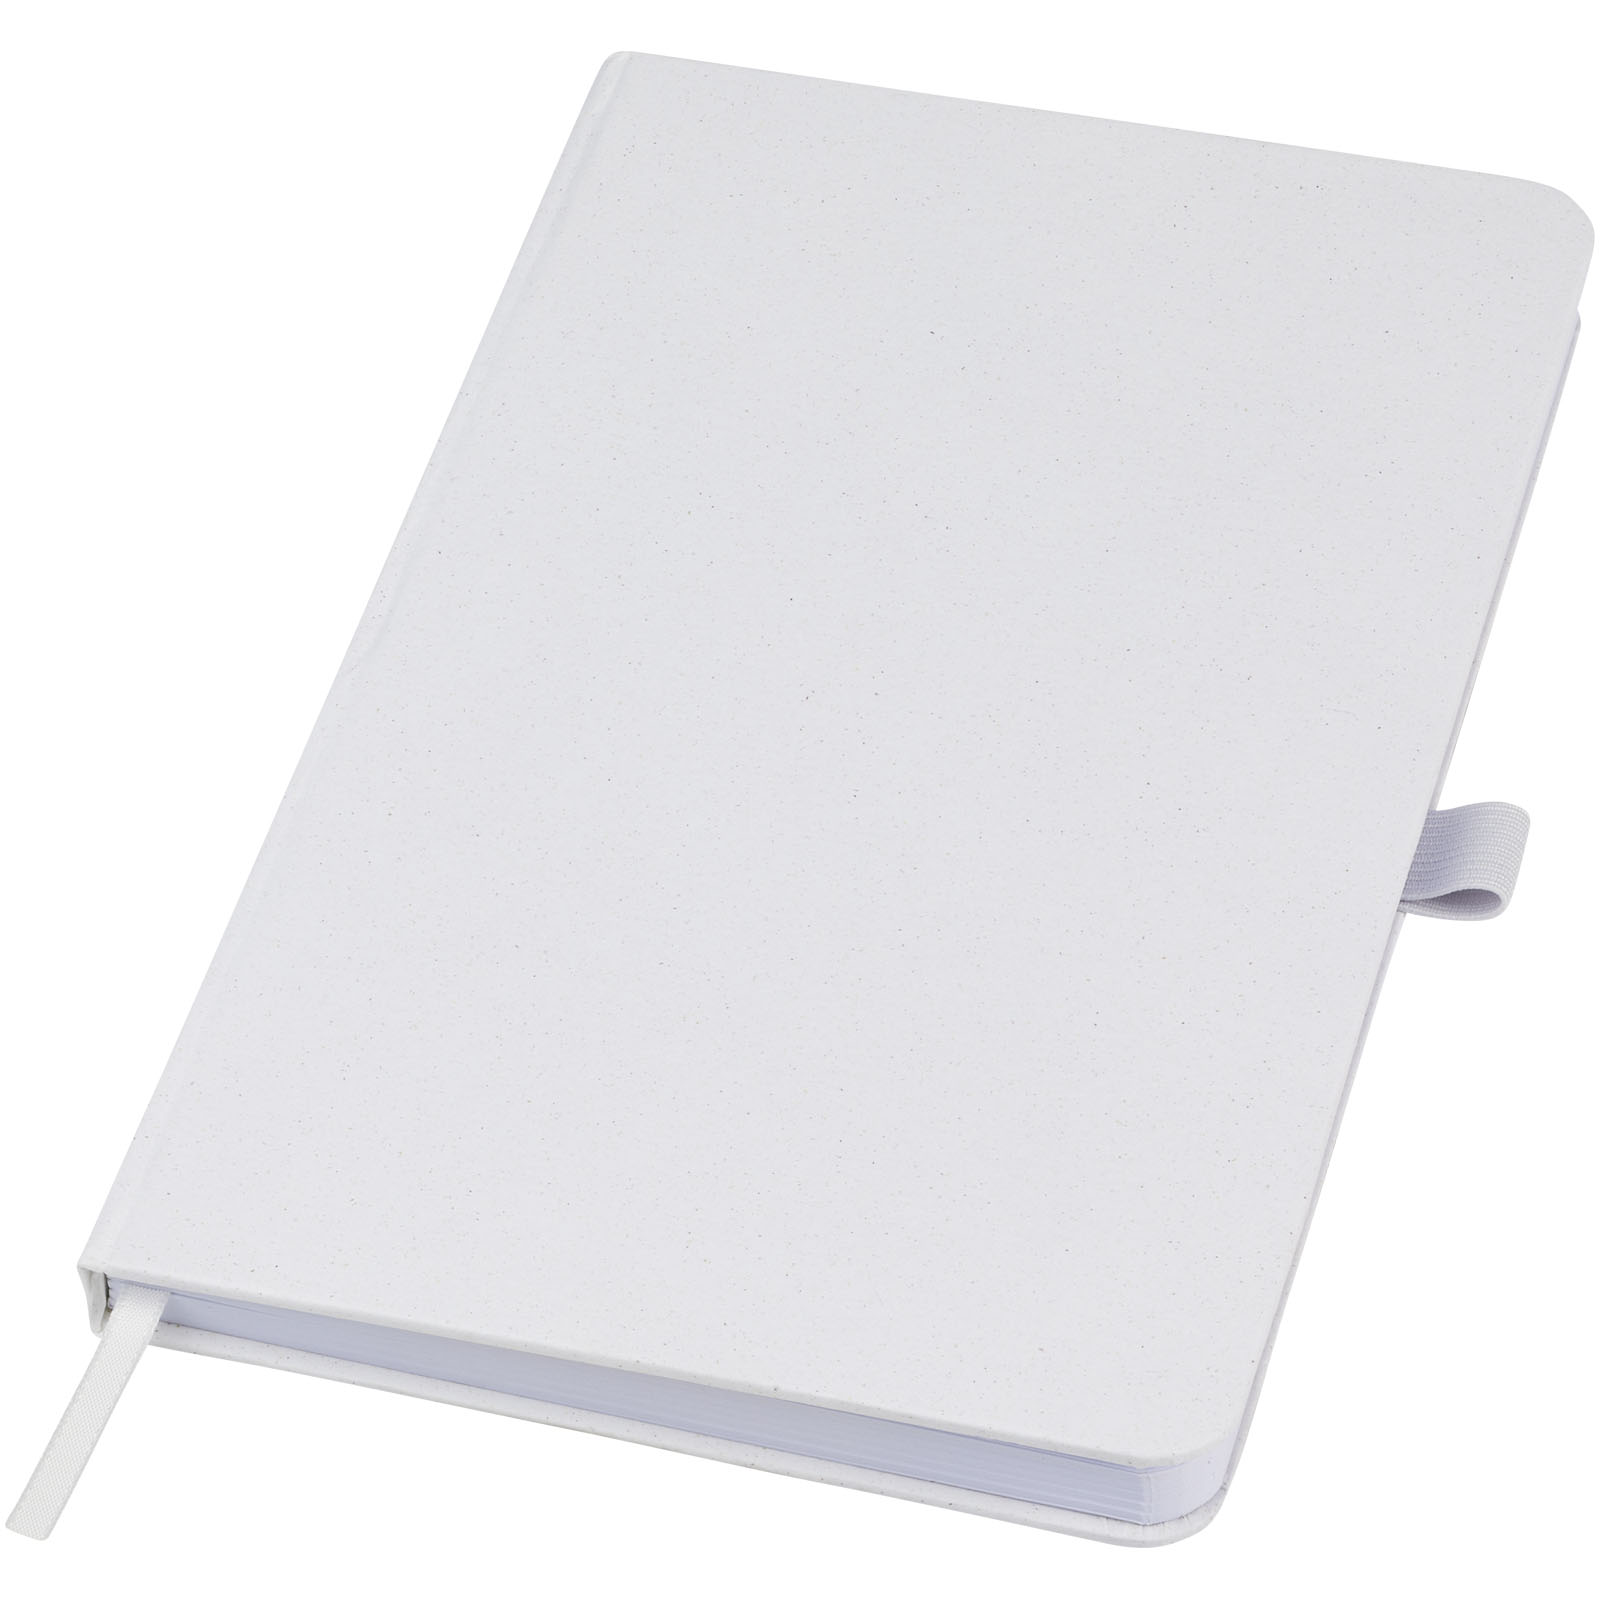 Hard cover notebooks - Fabianna crush paper hard cover notebook